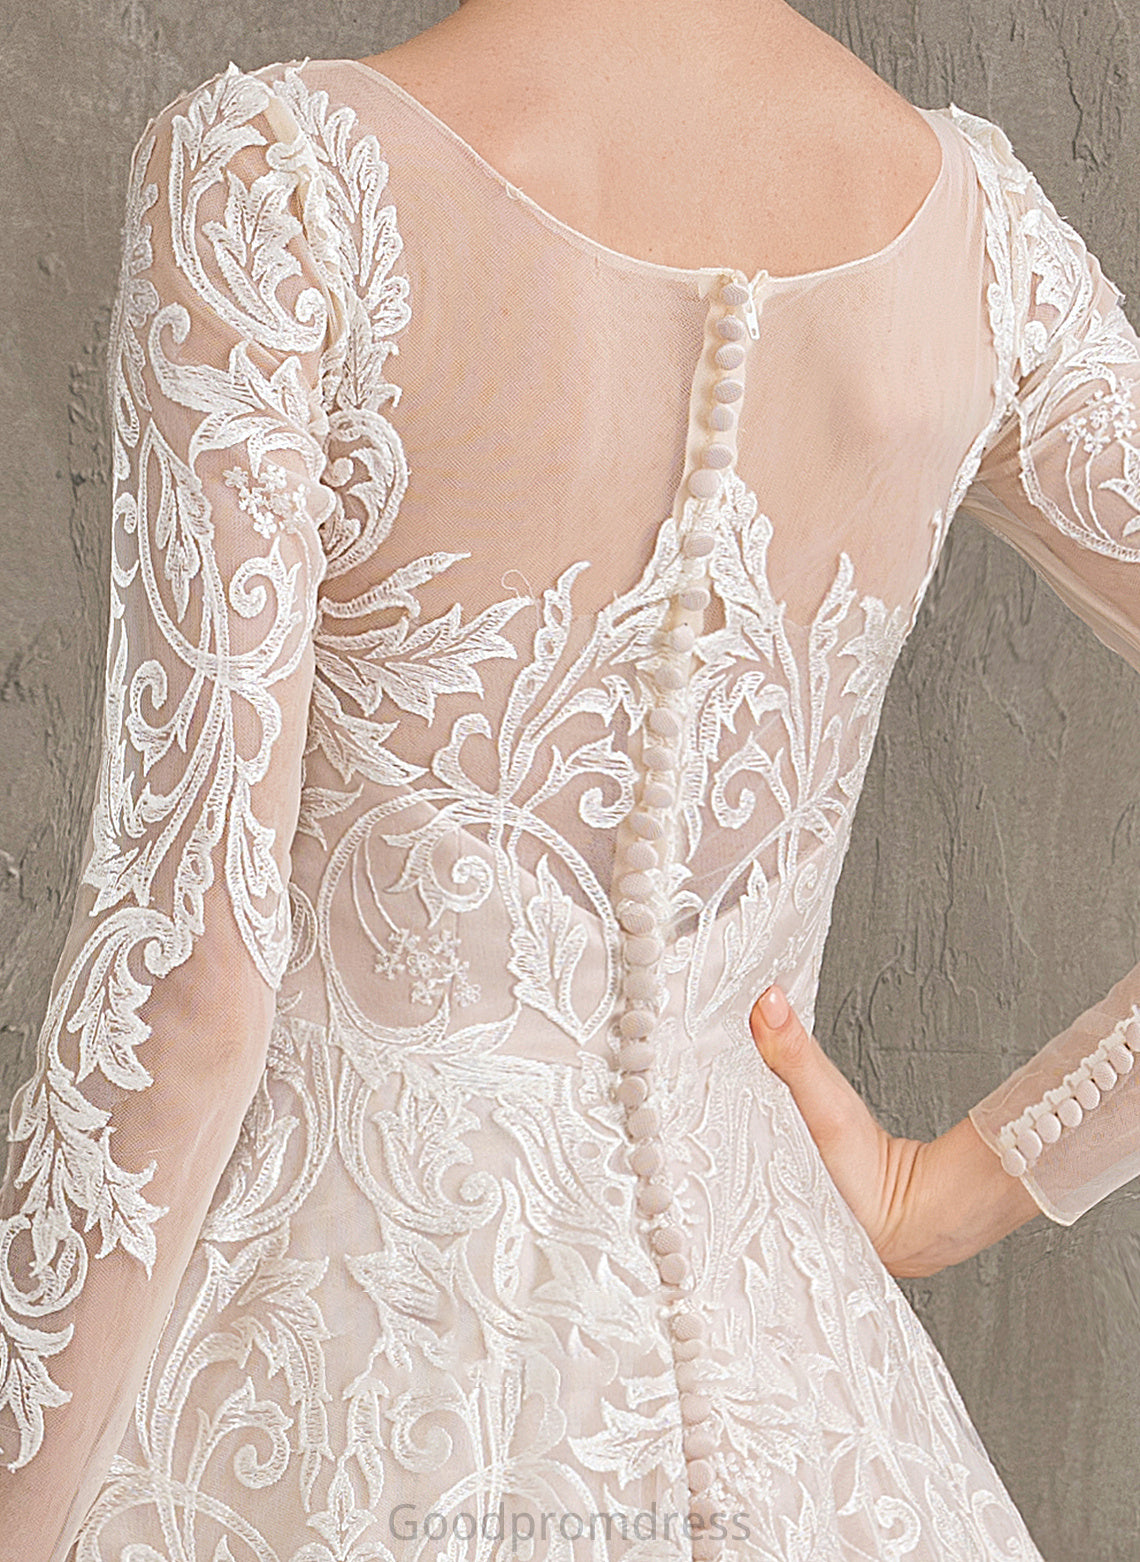 Lace Court Illusion Ball-Gown/Princess Wedding Martha Dress Wedding Dresses Train